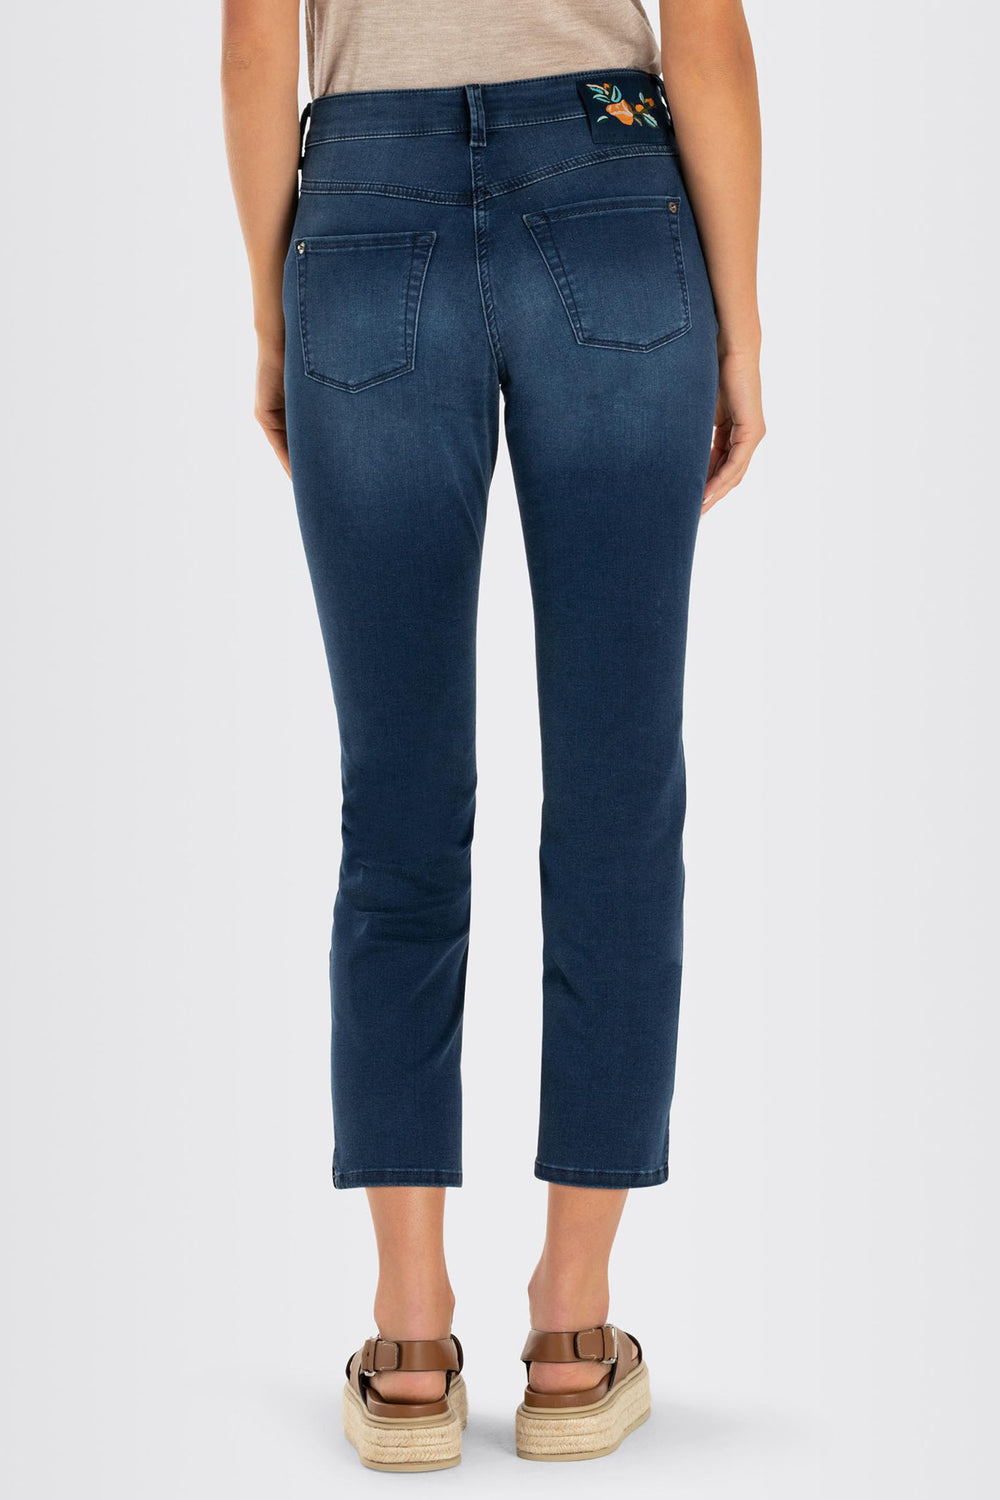 Mac 5492-90-0351L D677 Dream Summer Ocean Blue Washed Light Denim Jeans - Olivia Grace Fashion